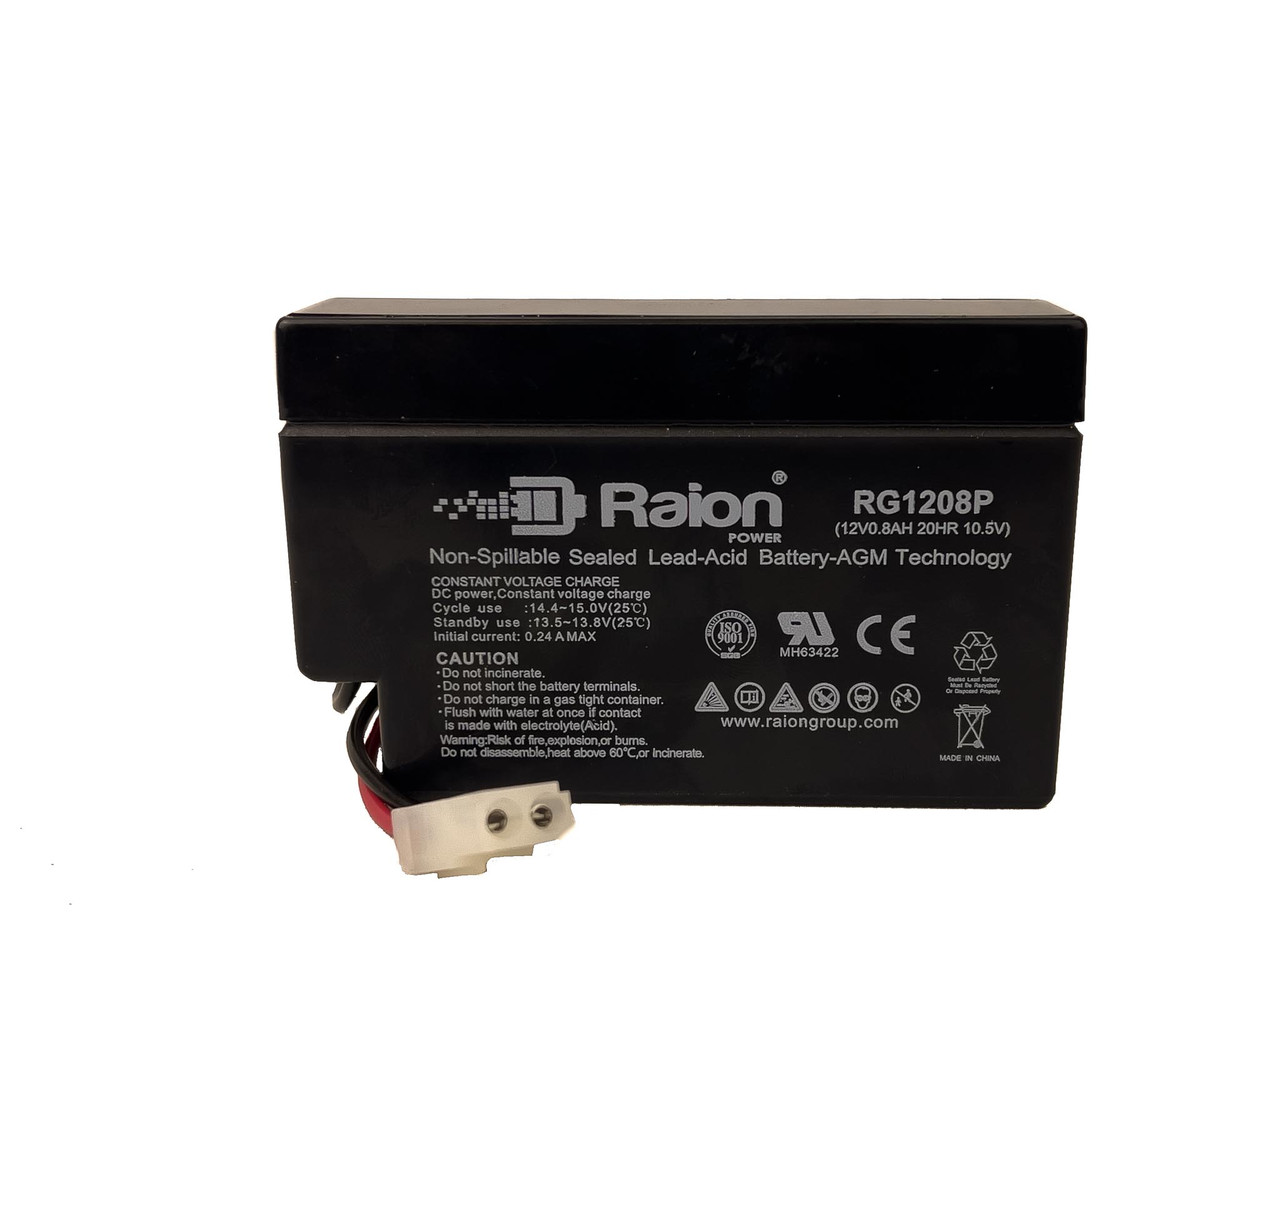 Raion Power 12V 0.8Ah SLA Battery With T1 Terminals For SigmasTek SP12-0.8